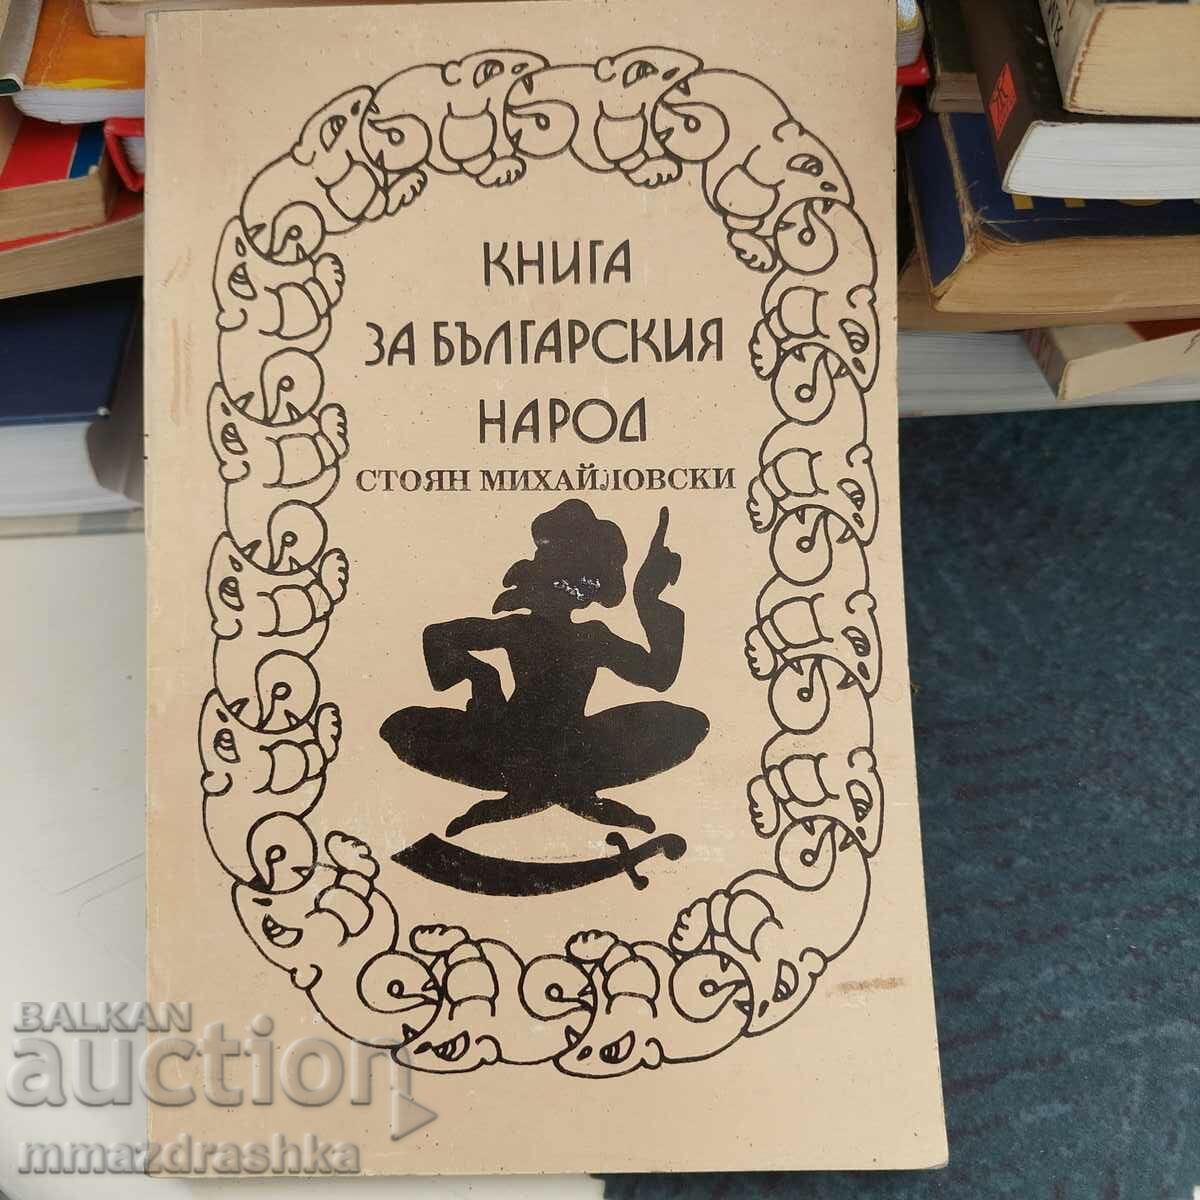 A book about the Bulgarian people, Stoyan Mihailovski